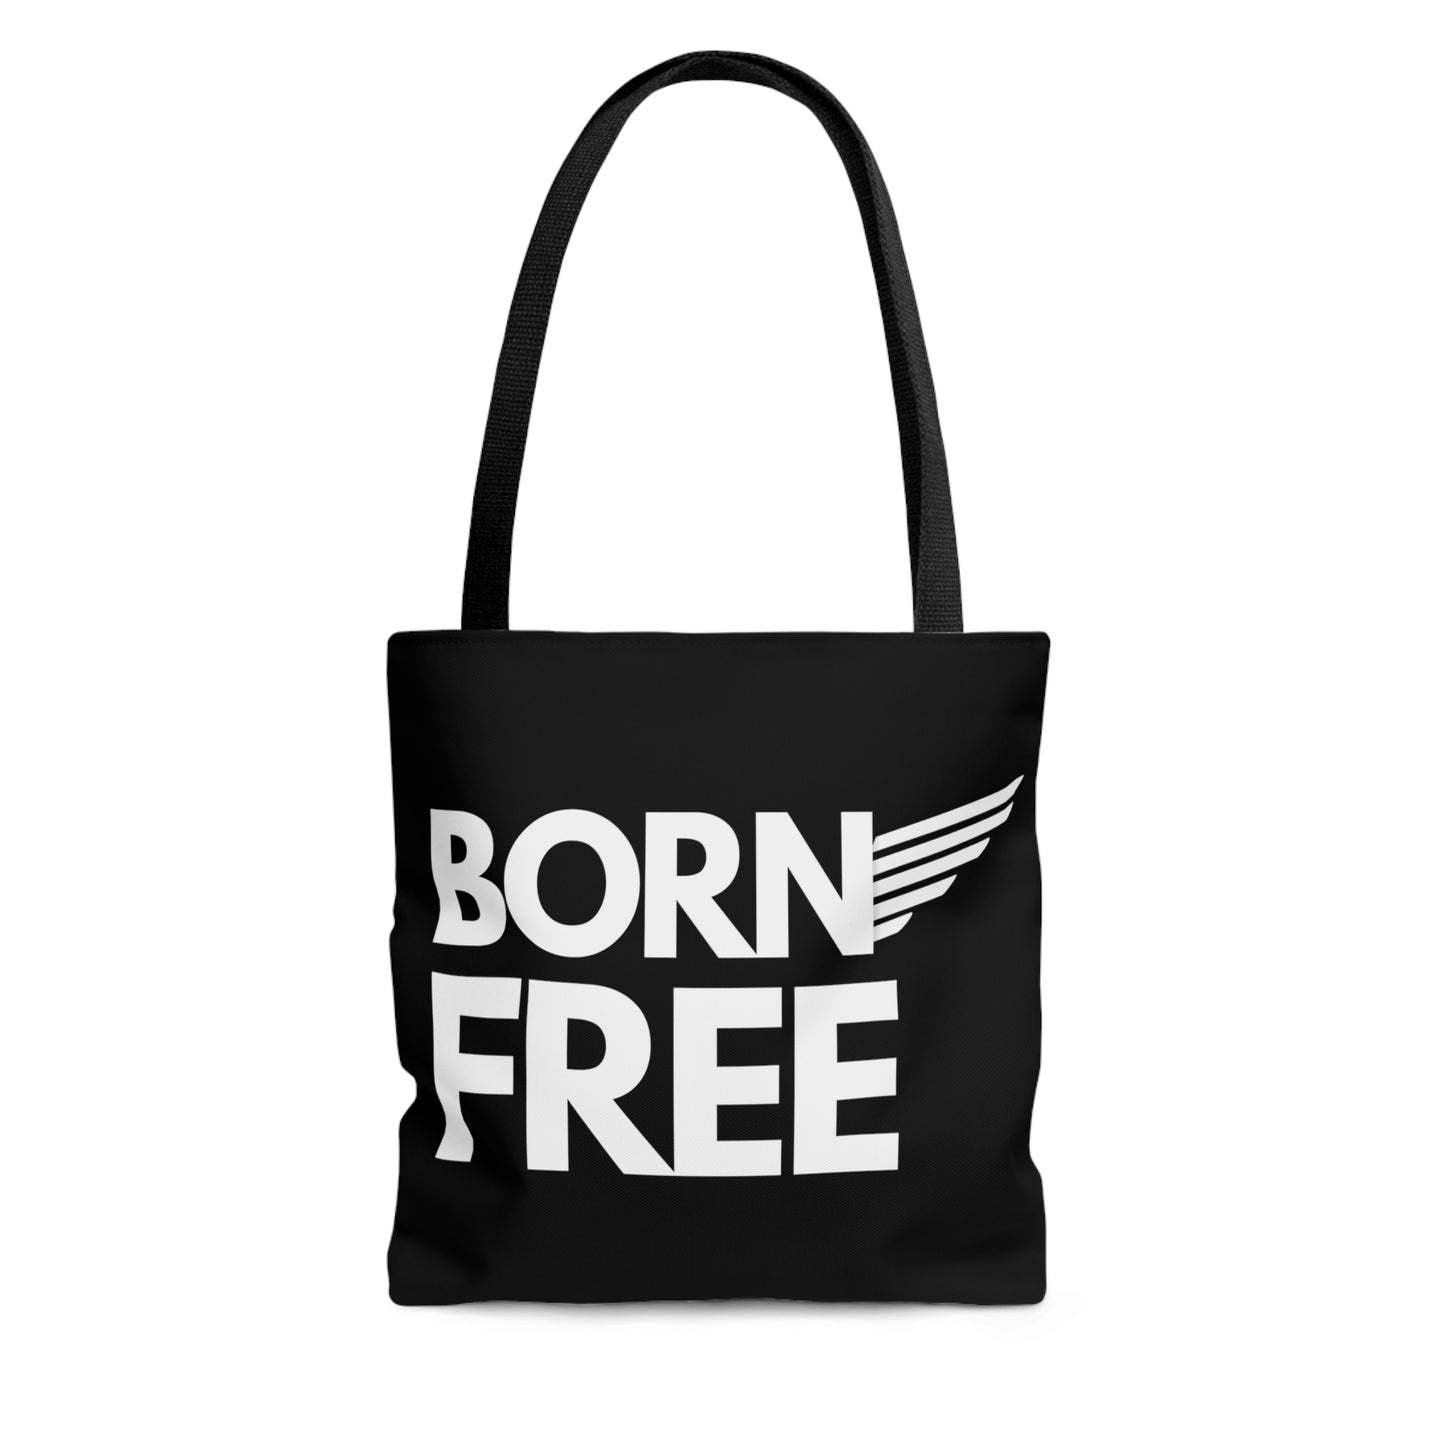 Fly Freedon Star Tote Bag